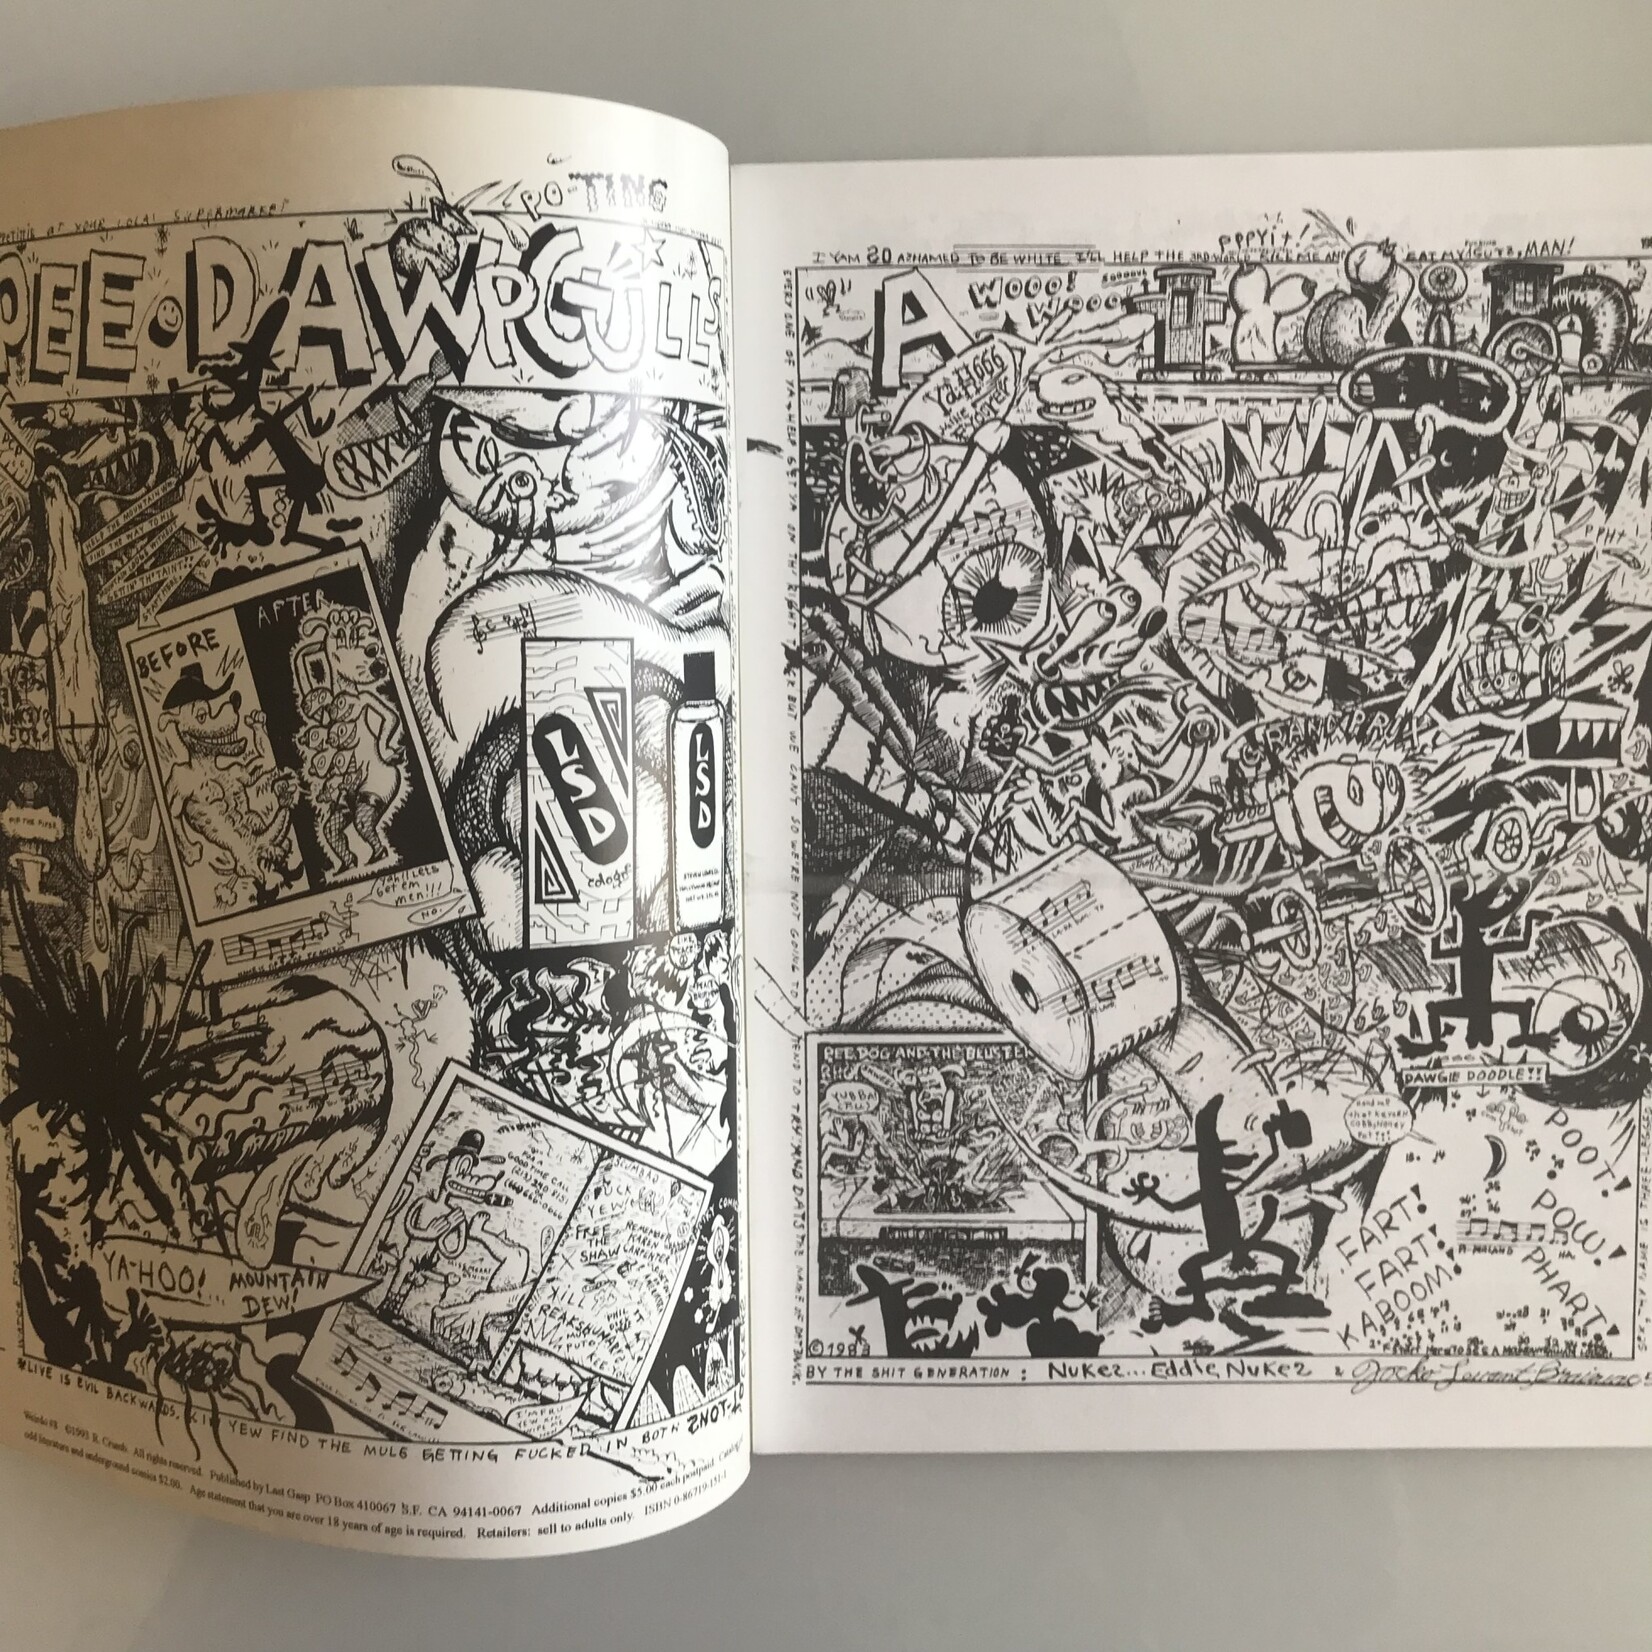 Weirdo - Vol. 1 #08 Summer 1983 (1993 Printing) - Comic Book